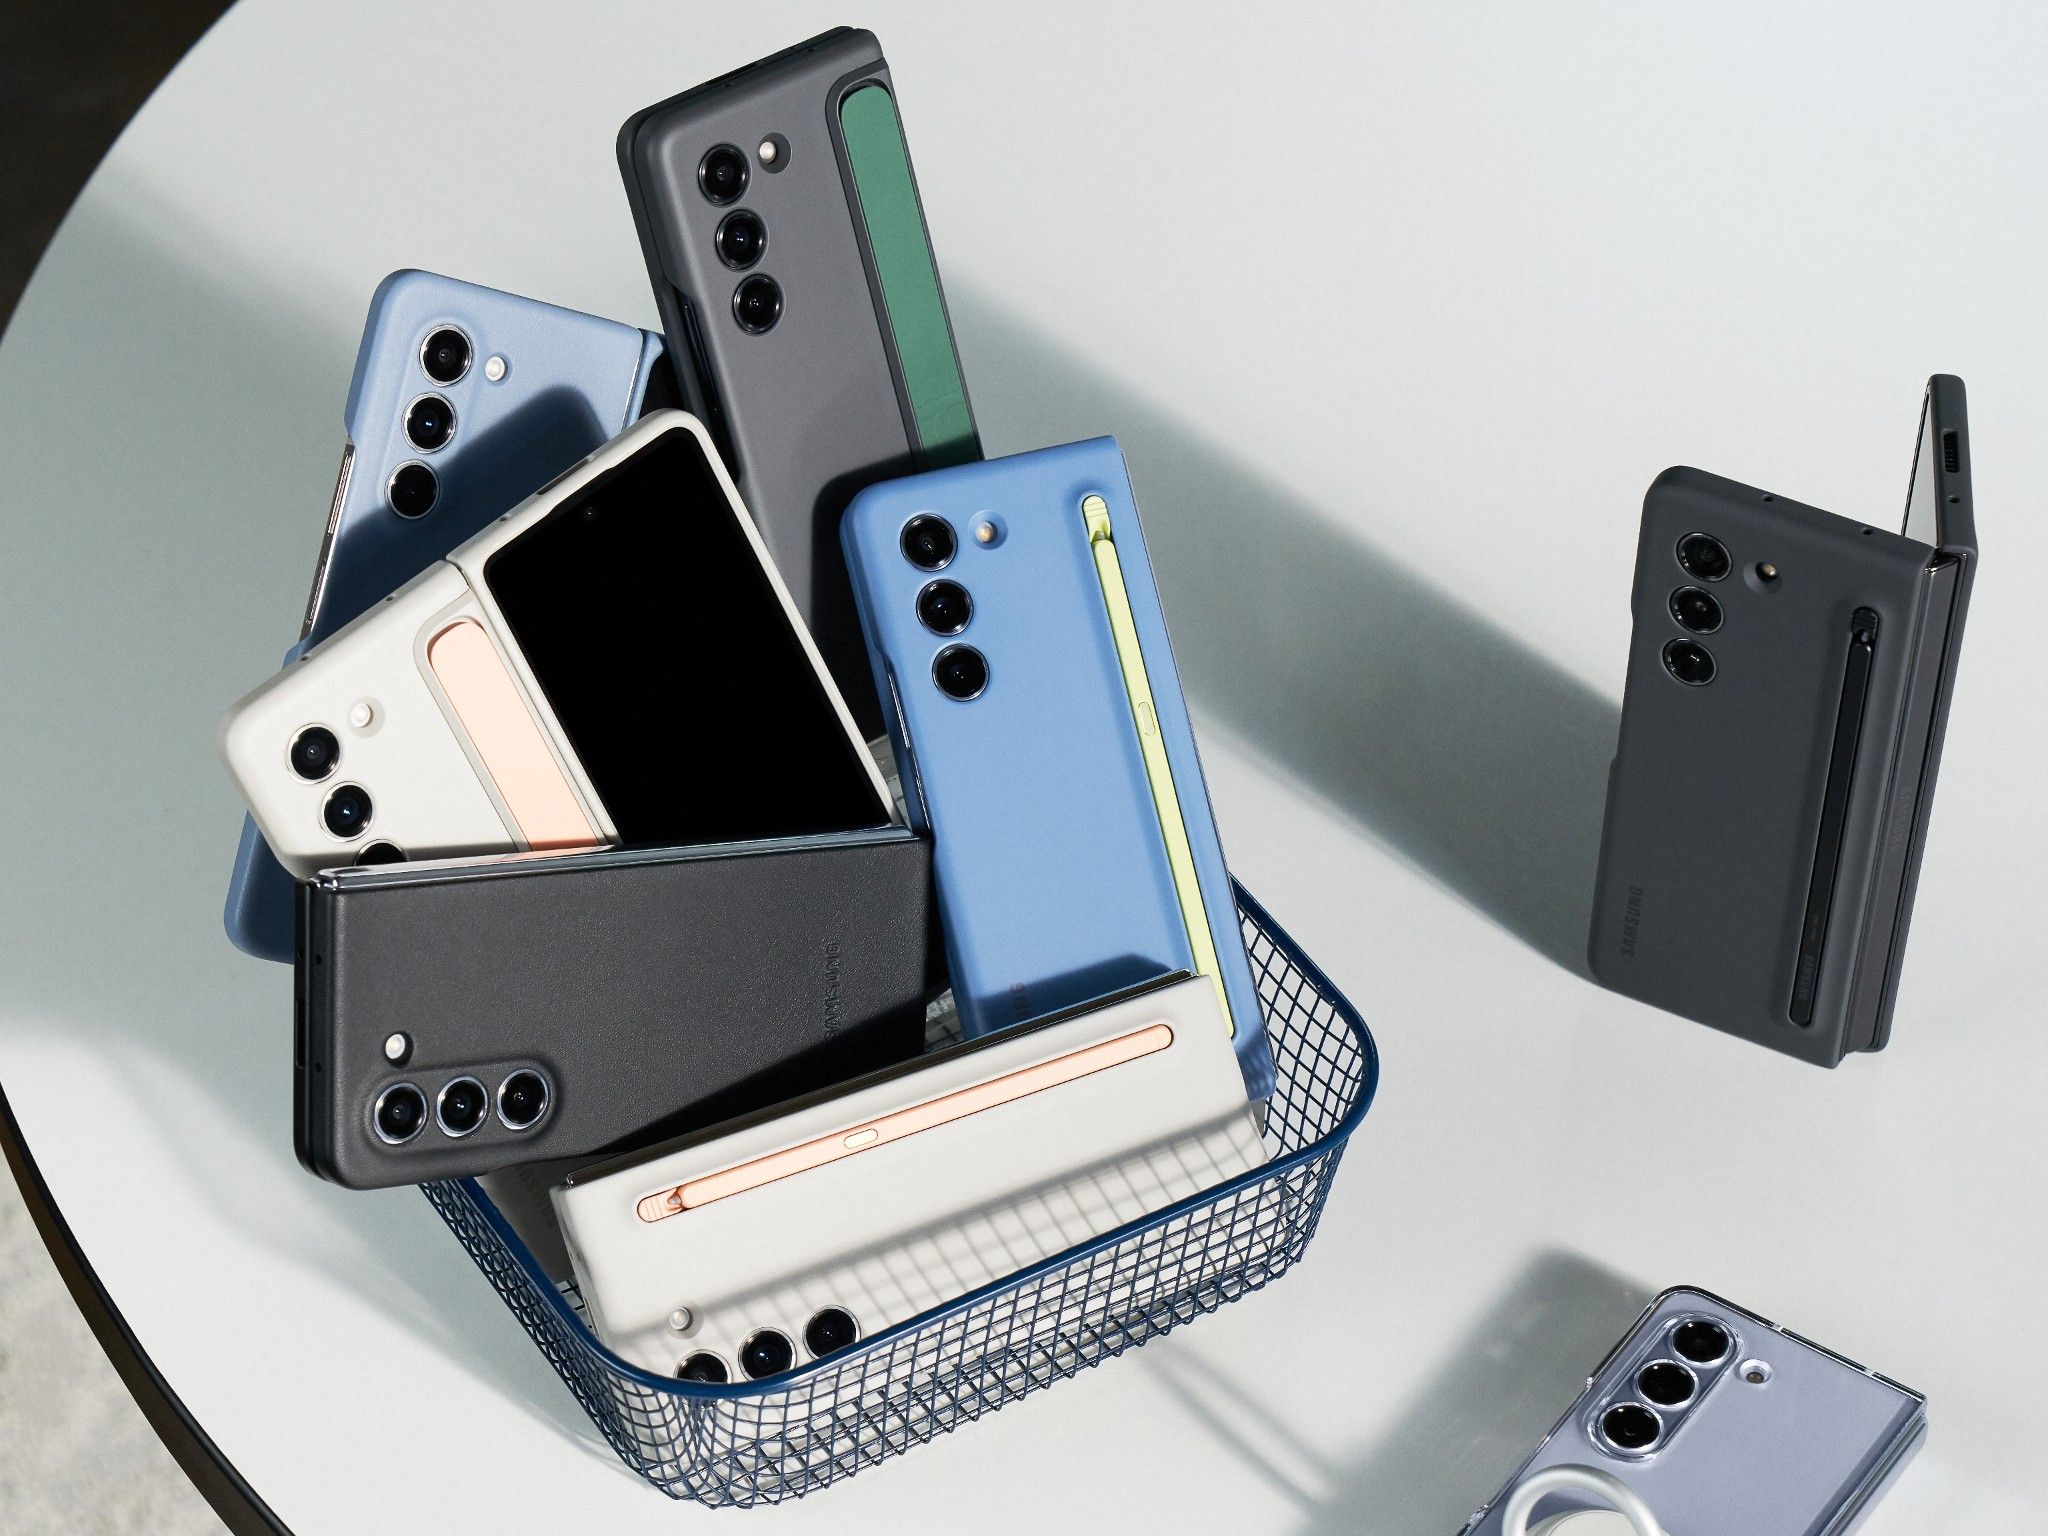 Best Samsung Galaxy Z Fold 5 cases in 2023